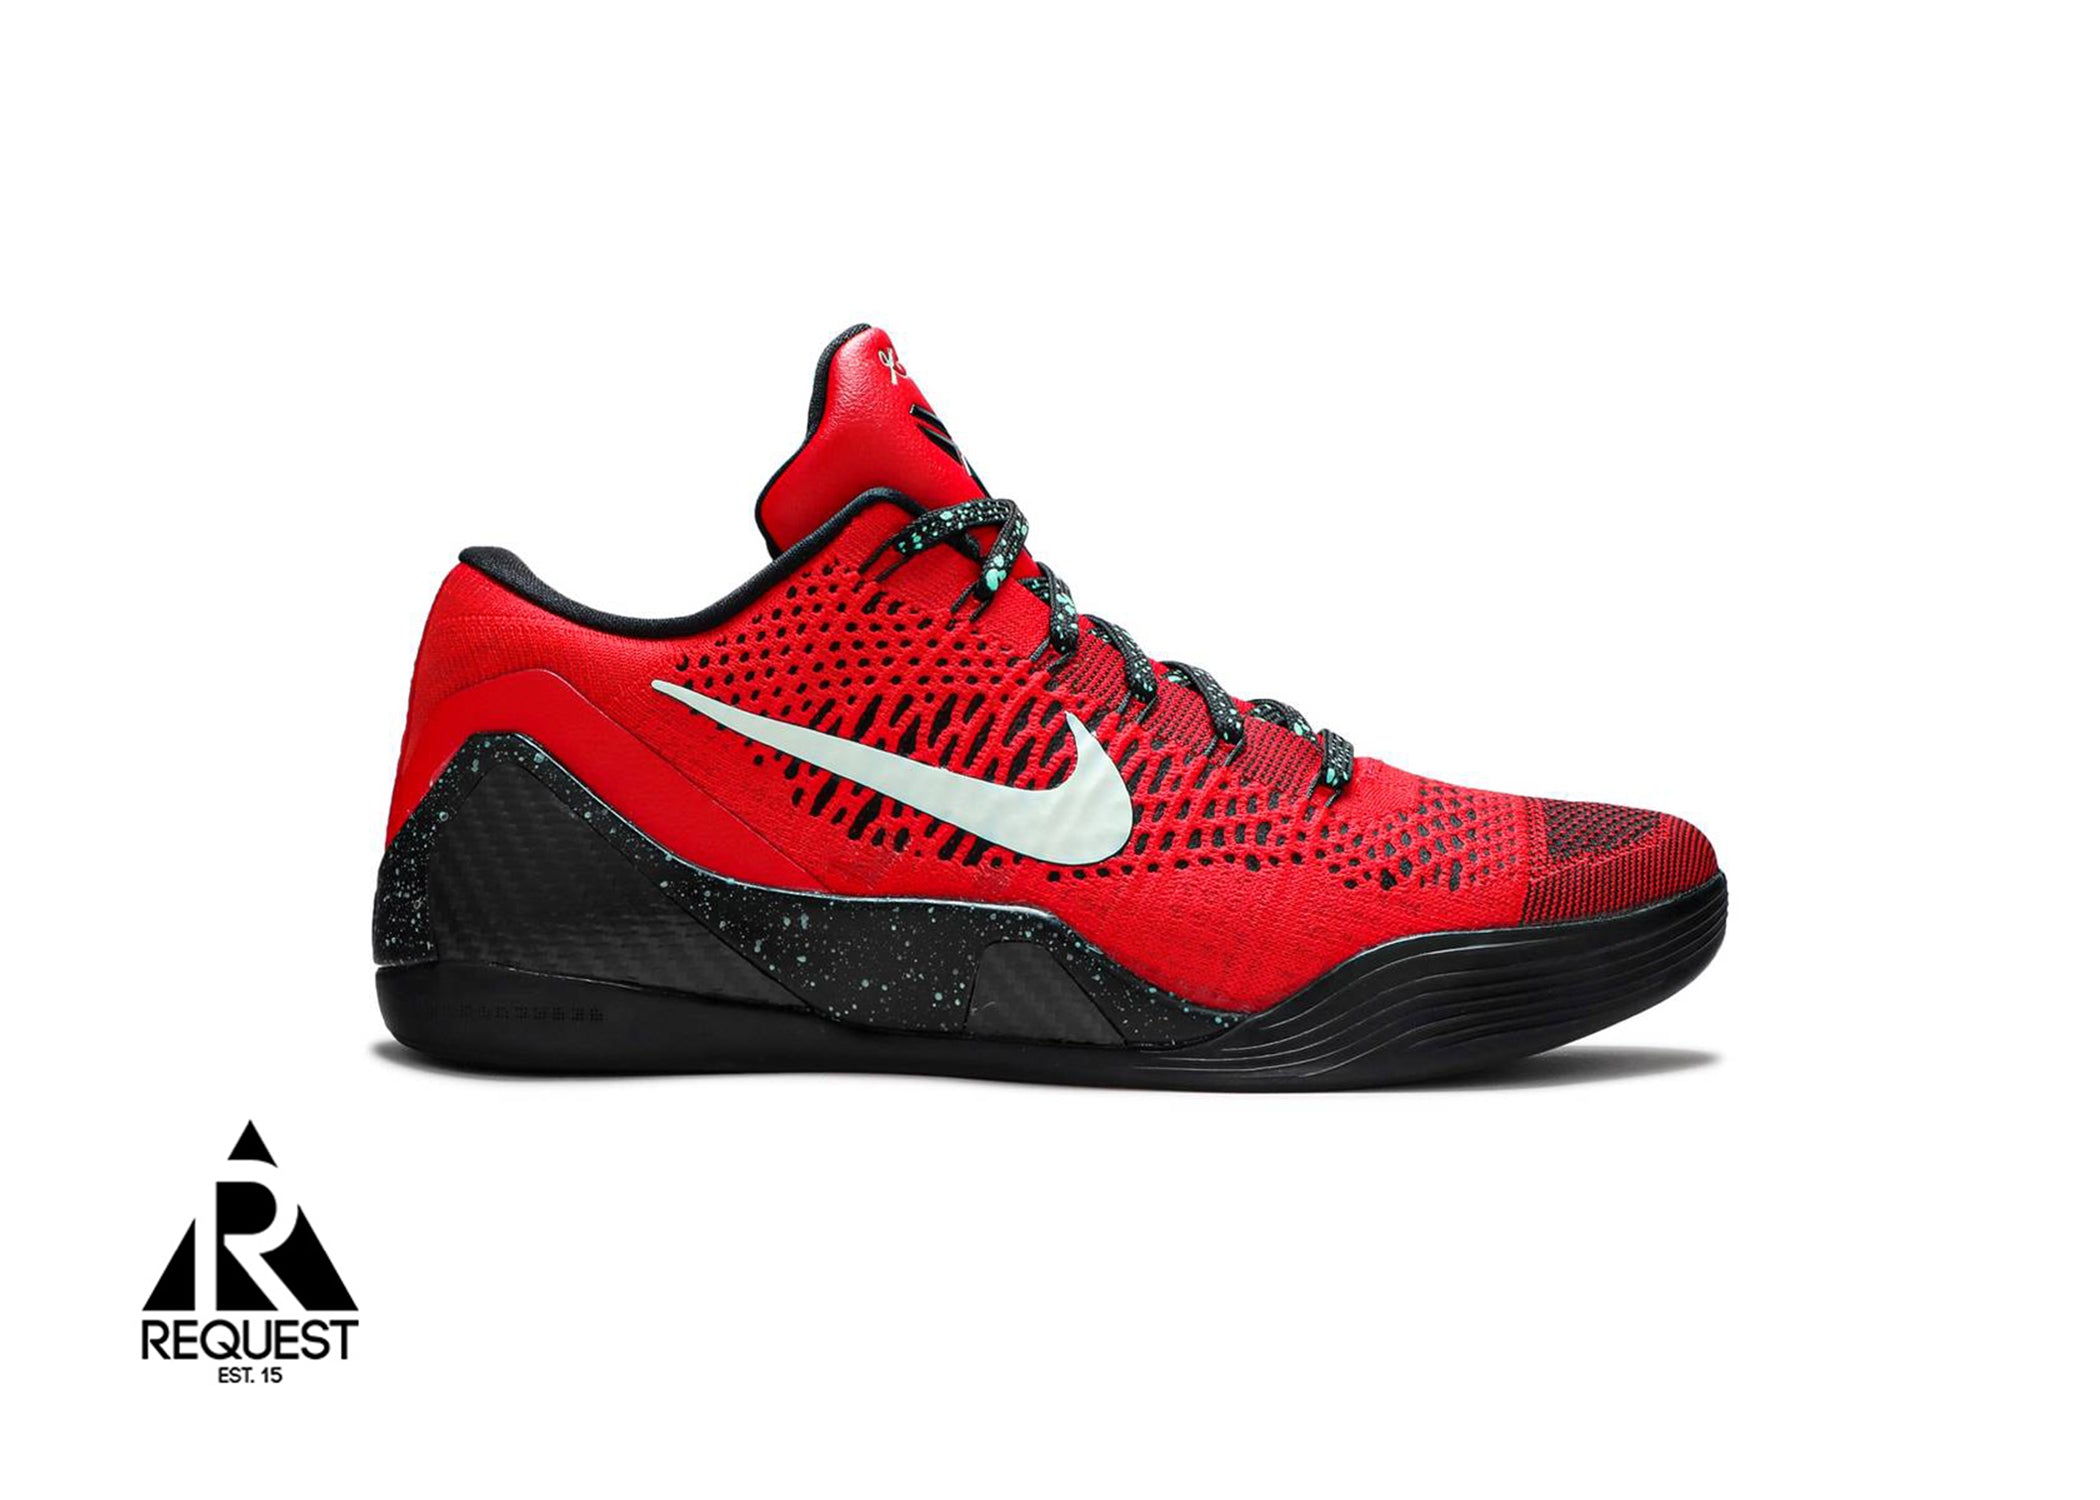 Nike Kobe 9 Elite Low "University Red"